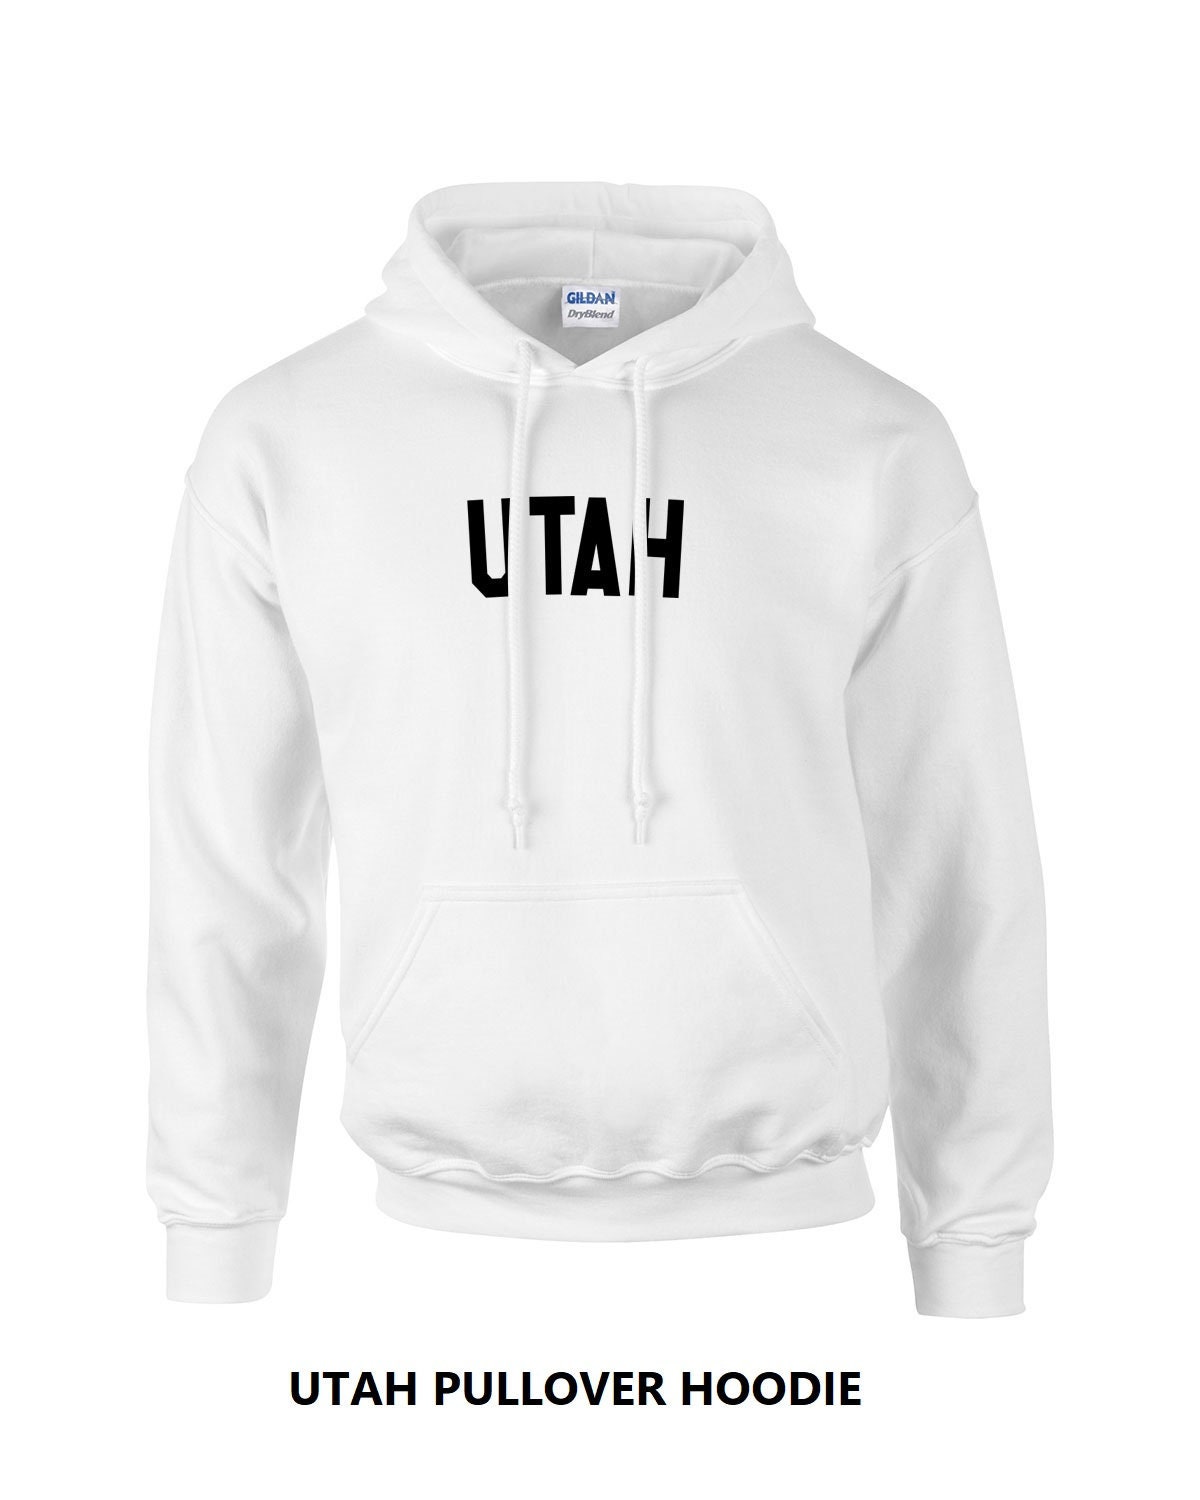 Utah State Shirt Athletic Wear USA T Novelty Gift Ideas Hoodie Sweatshirt 